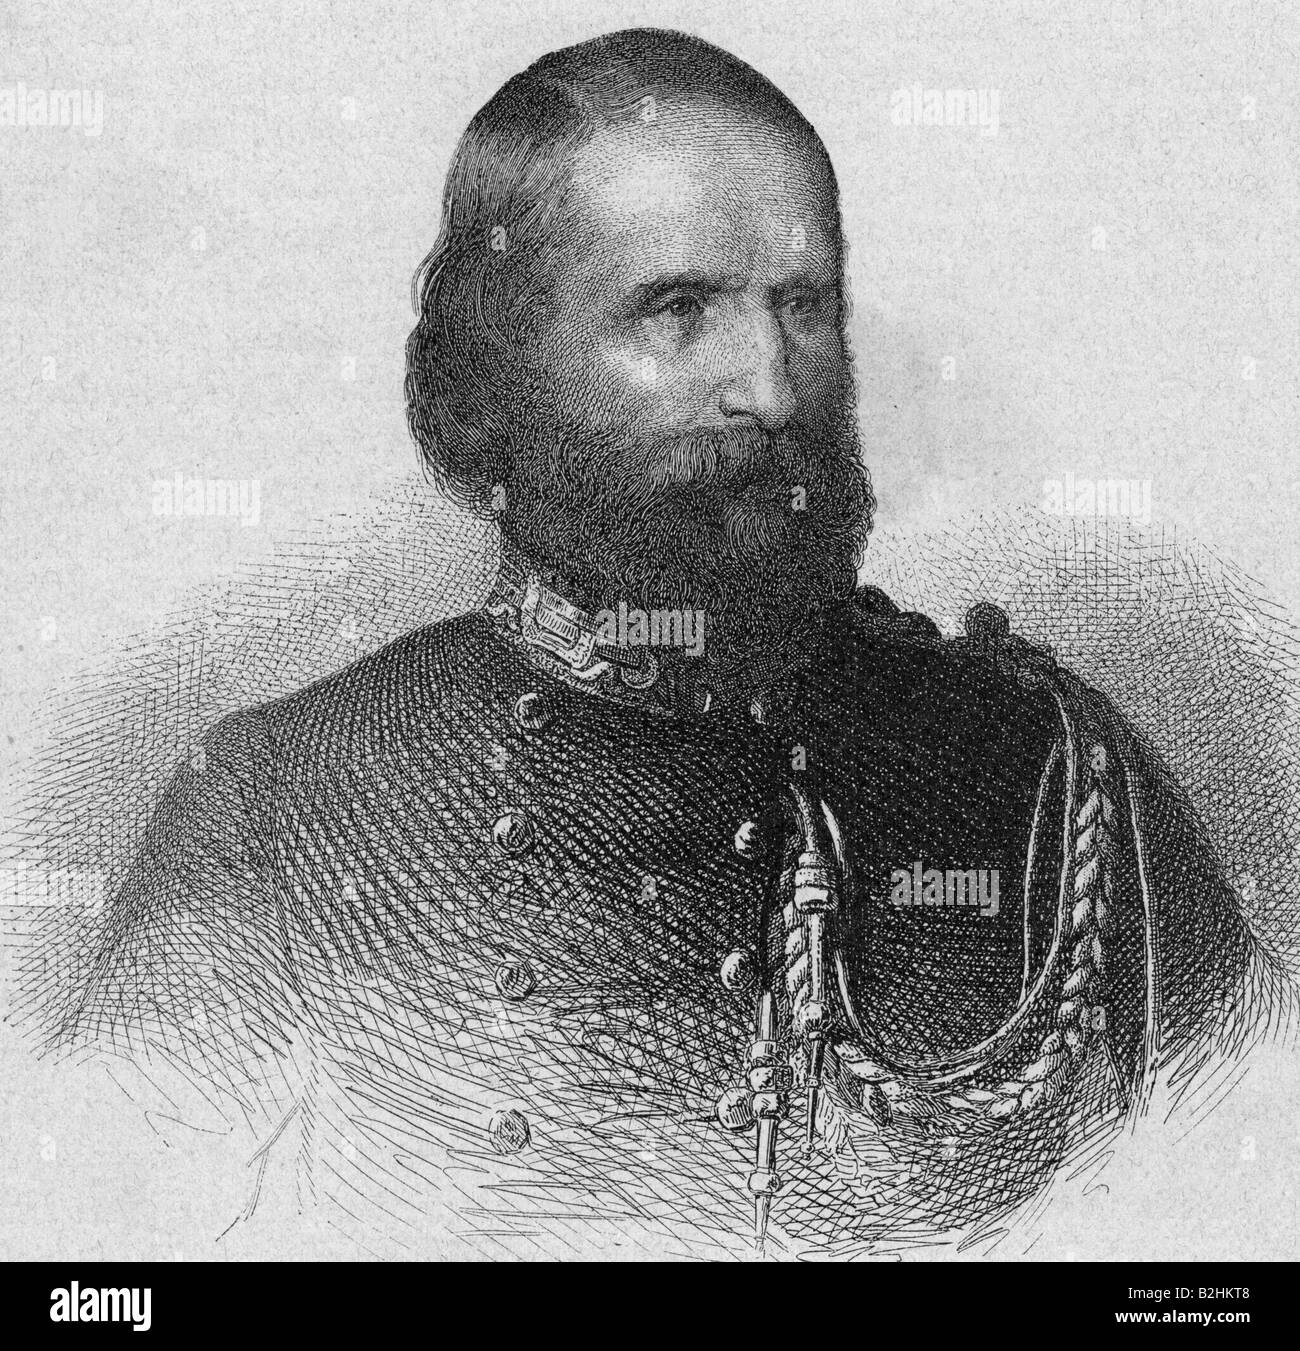 Garibaldi, Guiseppe, 4.7.1807 - 2.6.1882, Italian freedomfighter, portrait, after engraving by Metzmacher, 19th century, Stock Photo